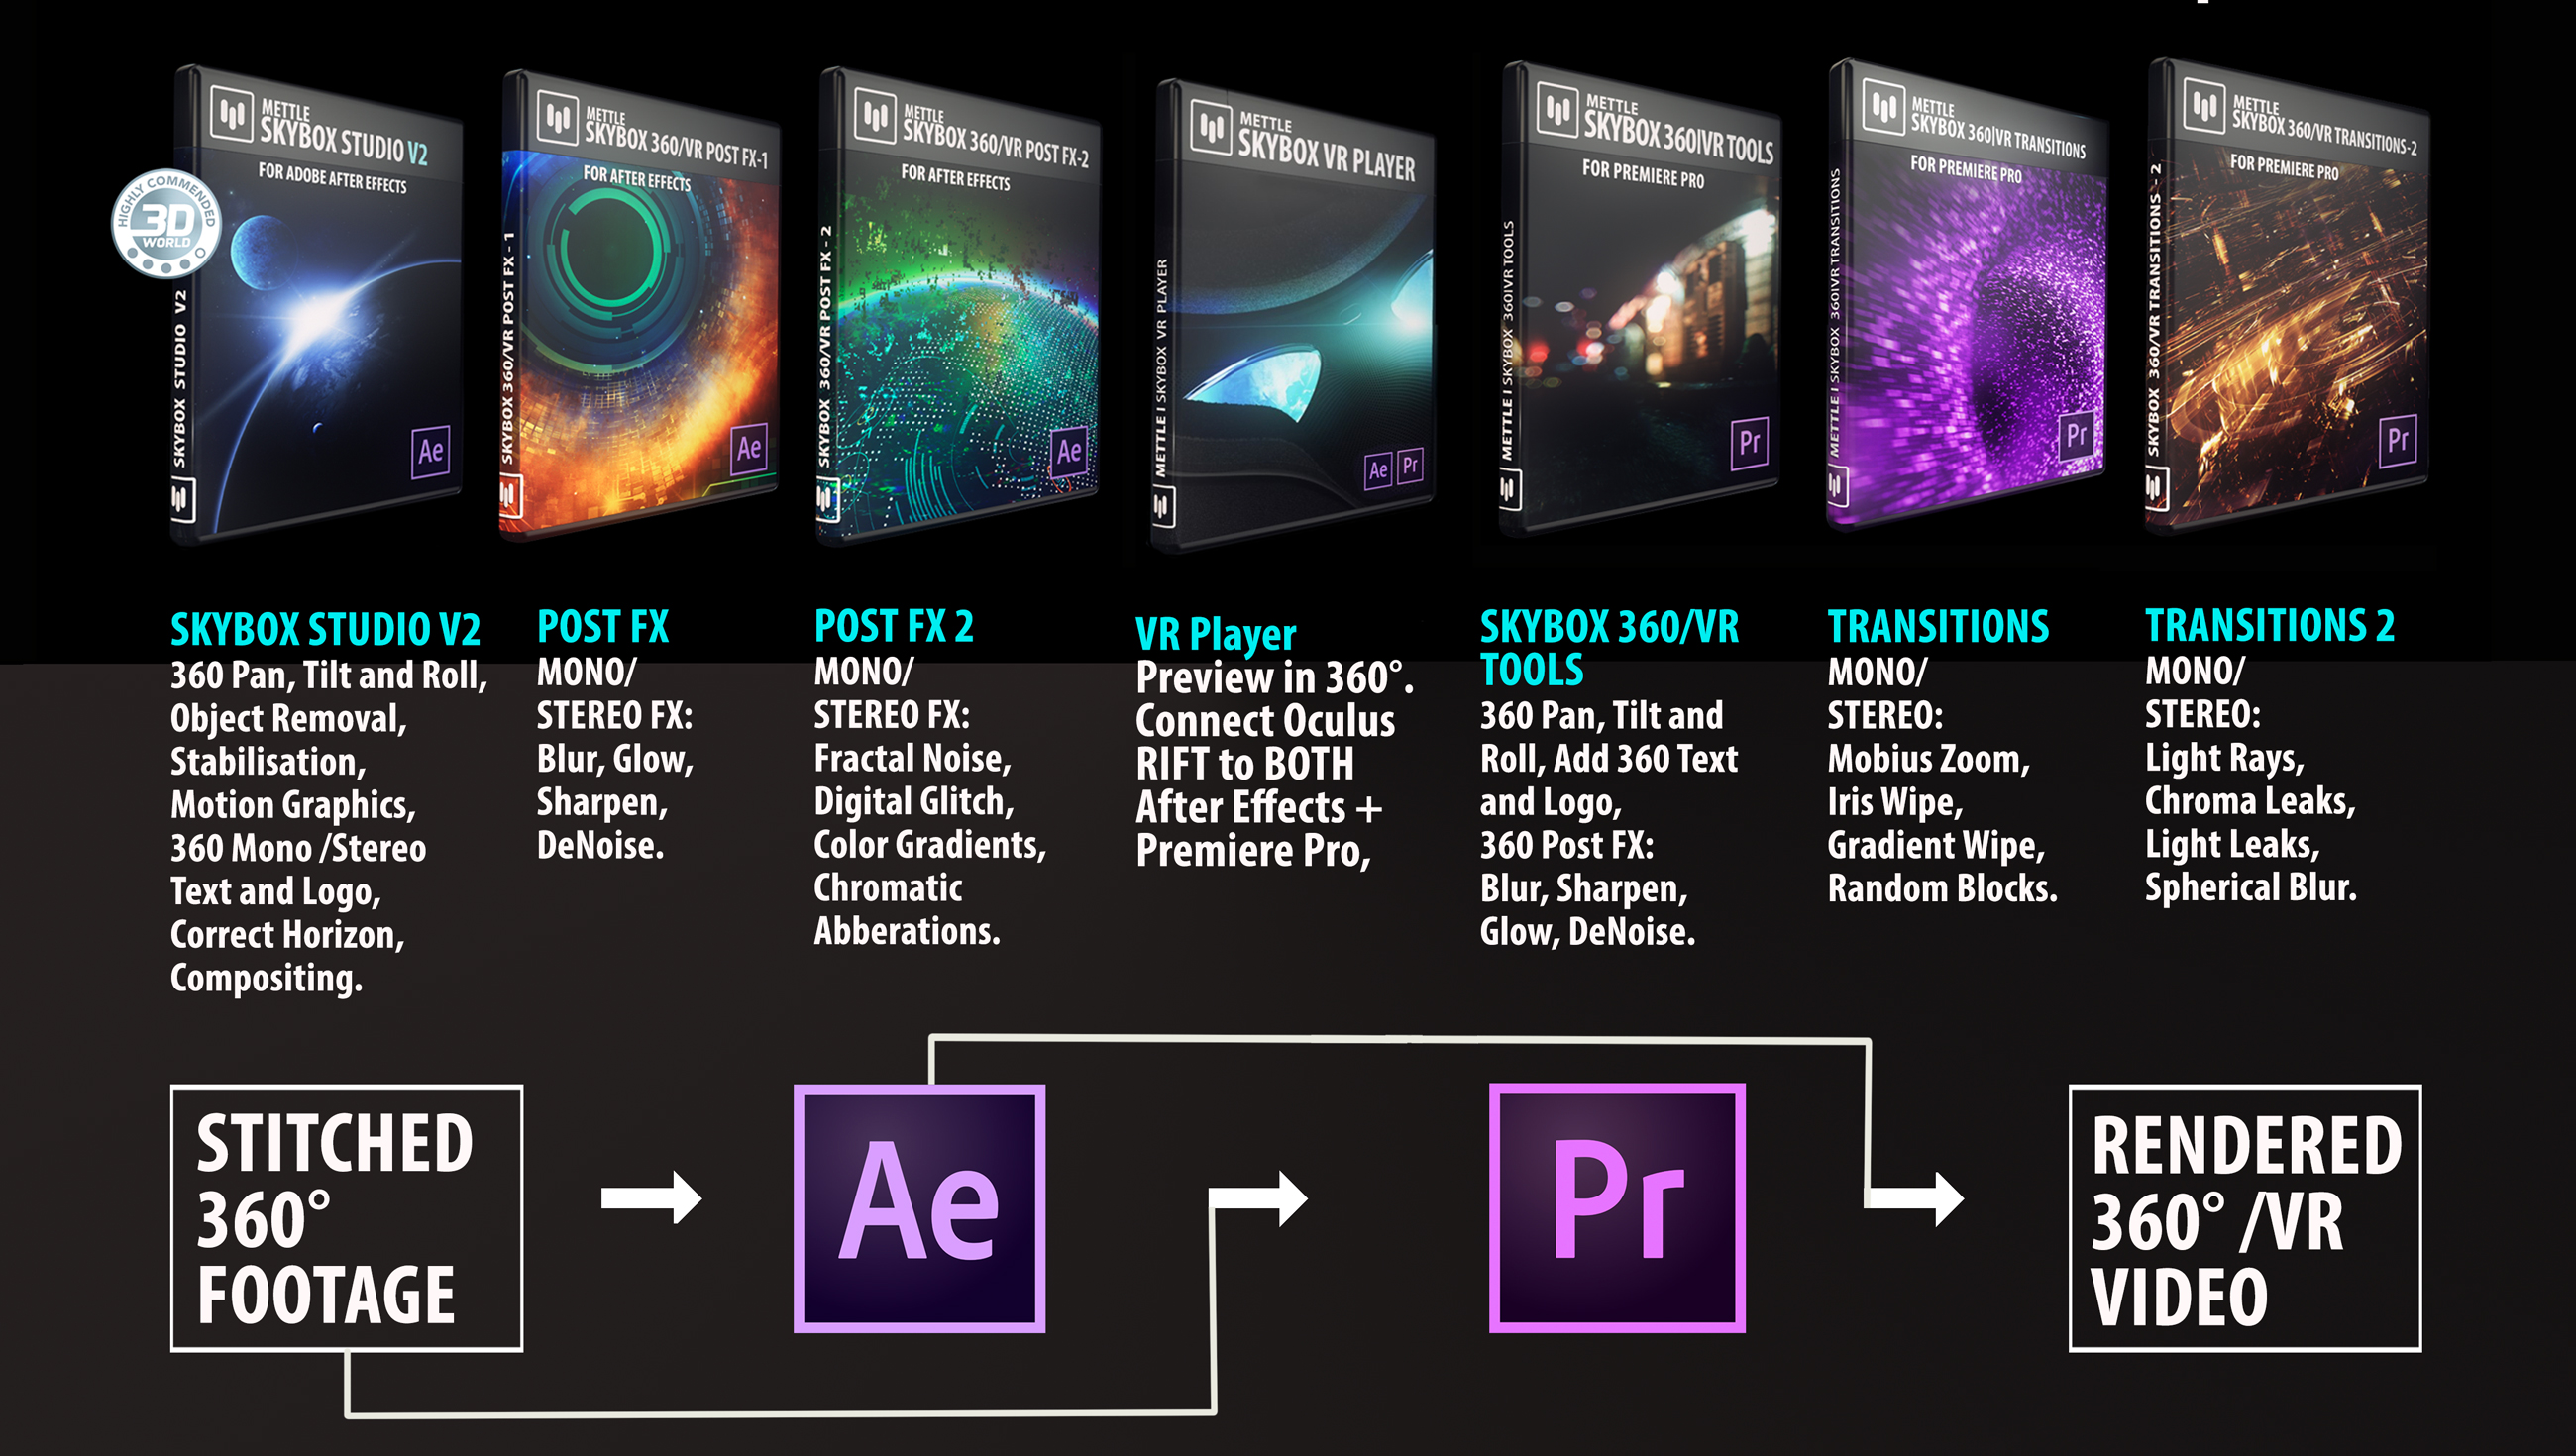 Post fx. Adobe Premiere Pro after Effects. Adobe Premiere Pro Pro Adobe after Effects. Adobe after Effects vs Adobe Premiere Pro. Premiere Pro Effects.